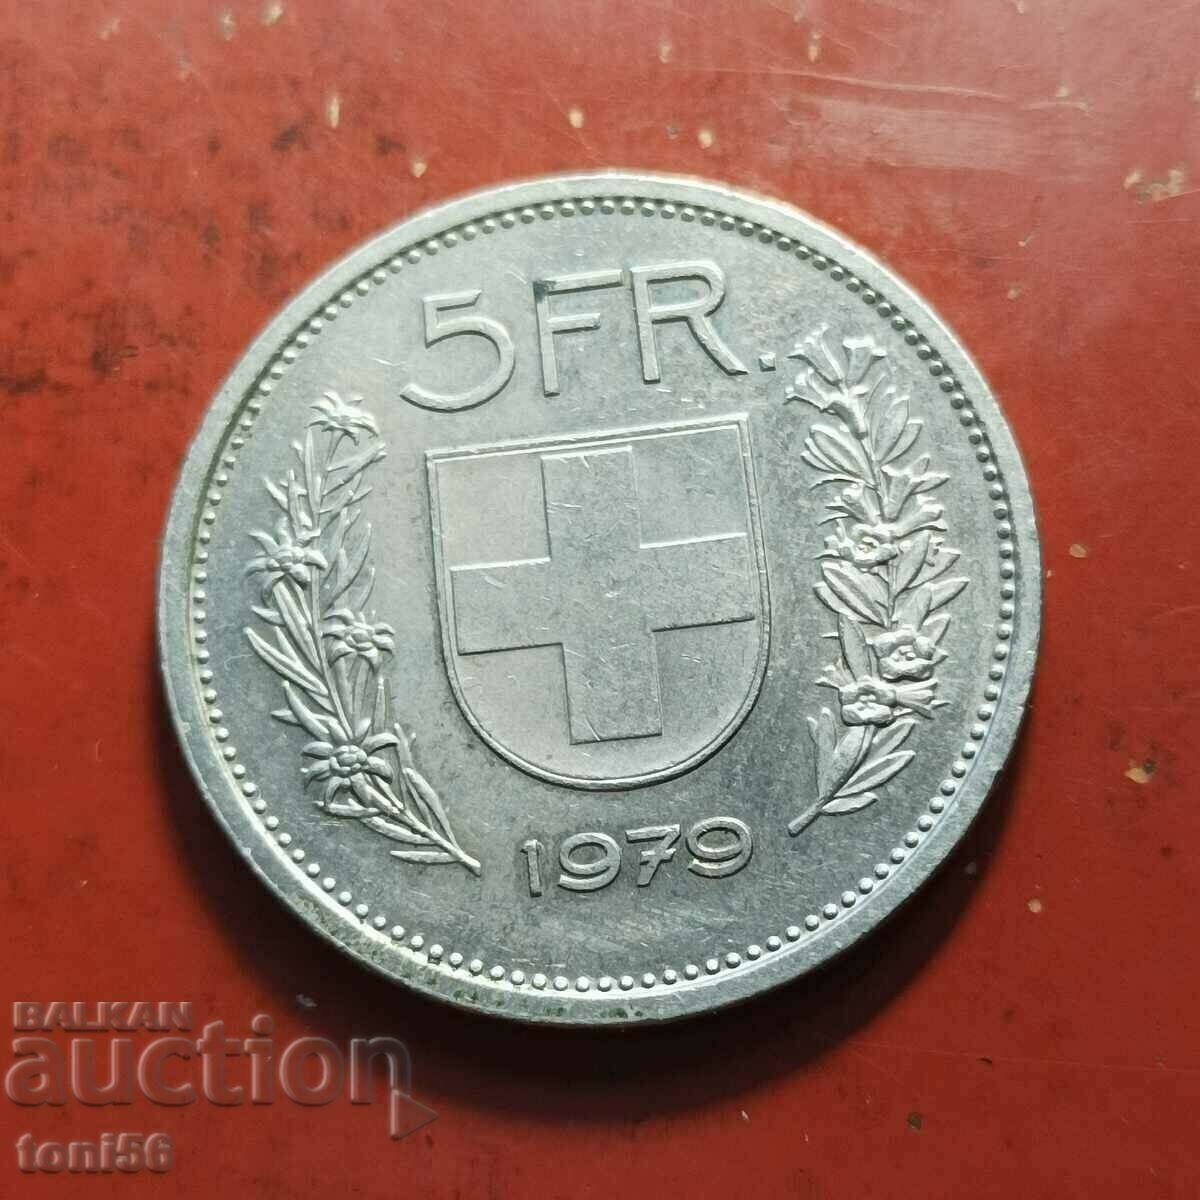 Швейцария 5 франка 1979  аUNC